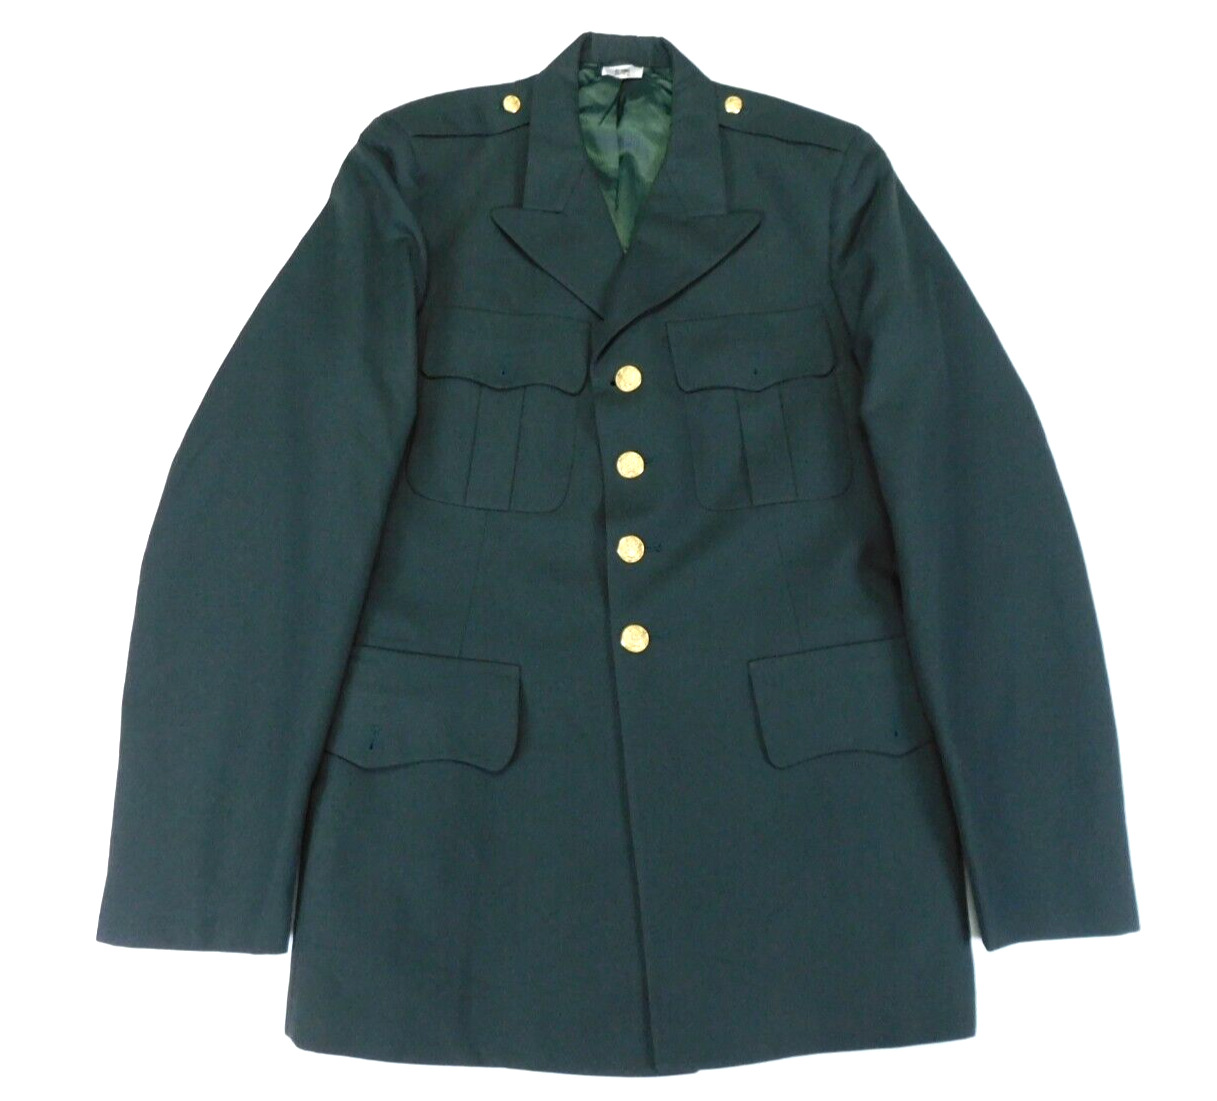 US Army Coat Jacket 41 Long Green Dacron/Wool AG 489 Dress Class III Uniform